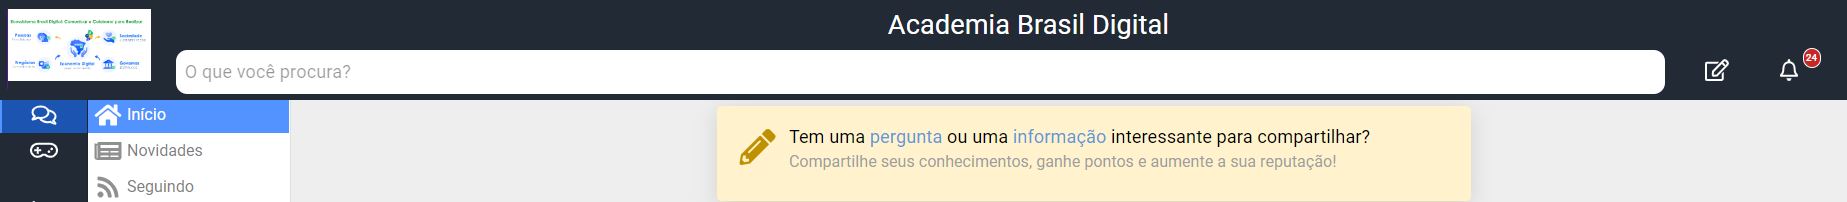 Academia Brasil Digital